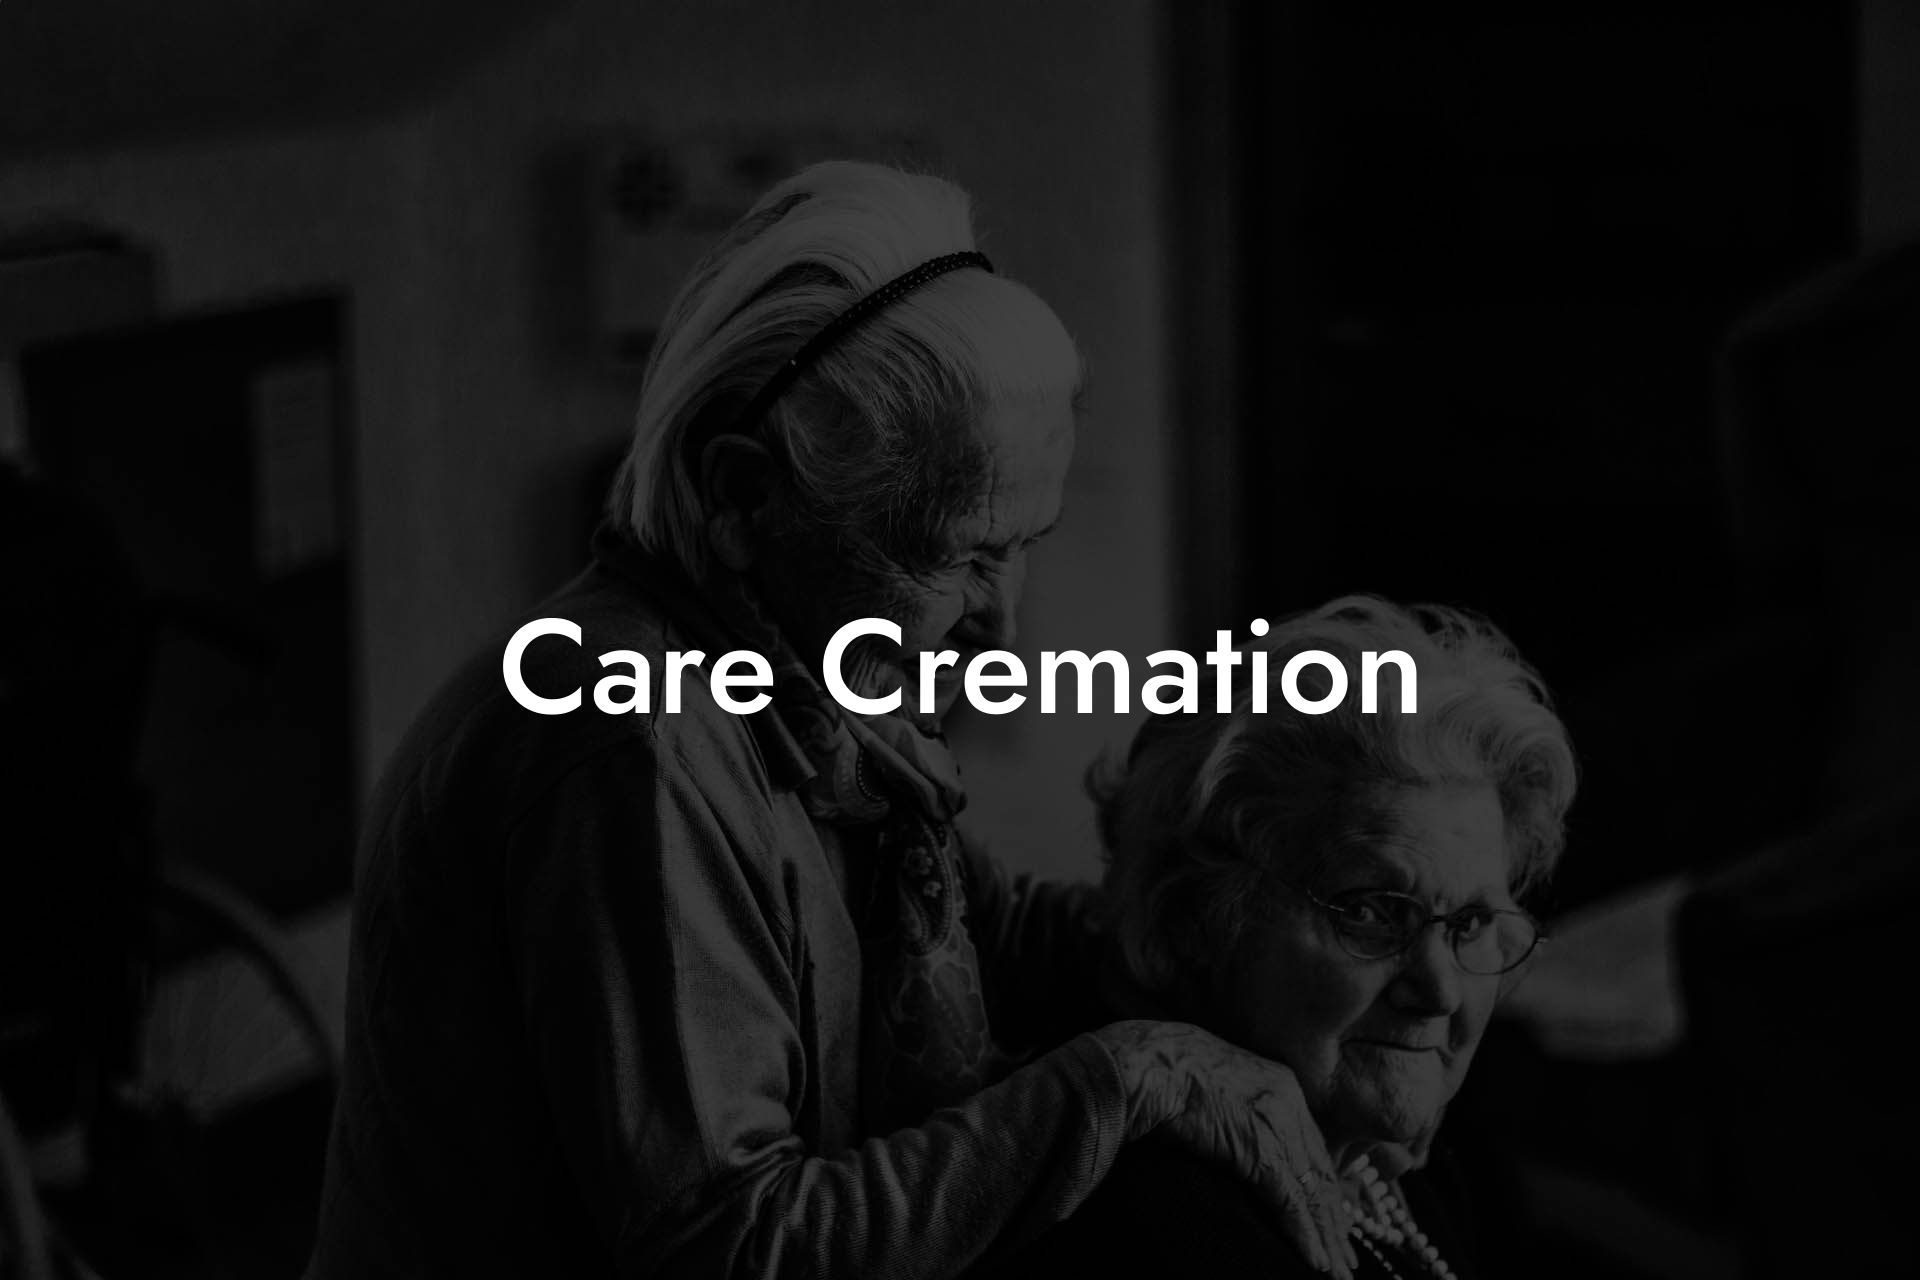 Care Cremation